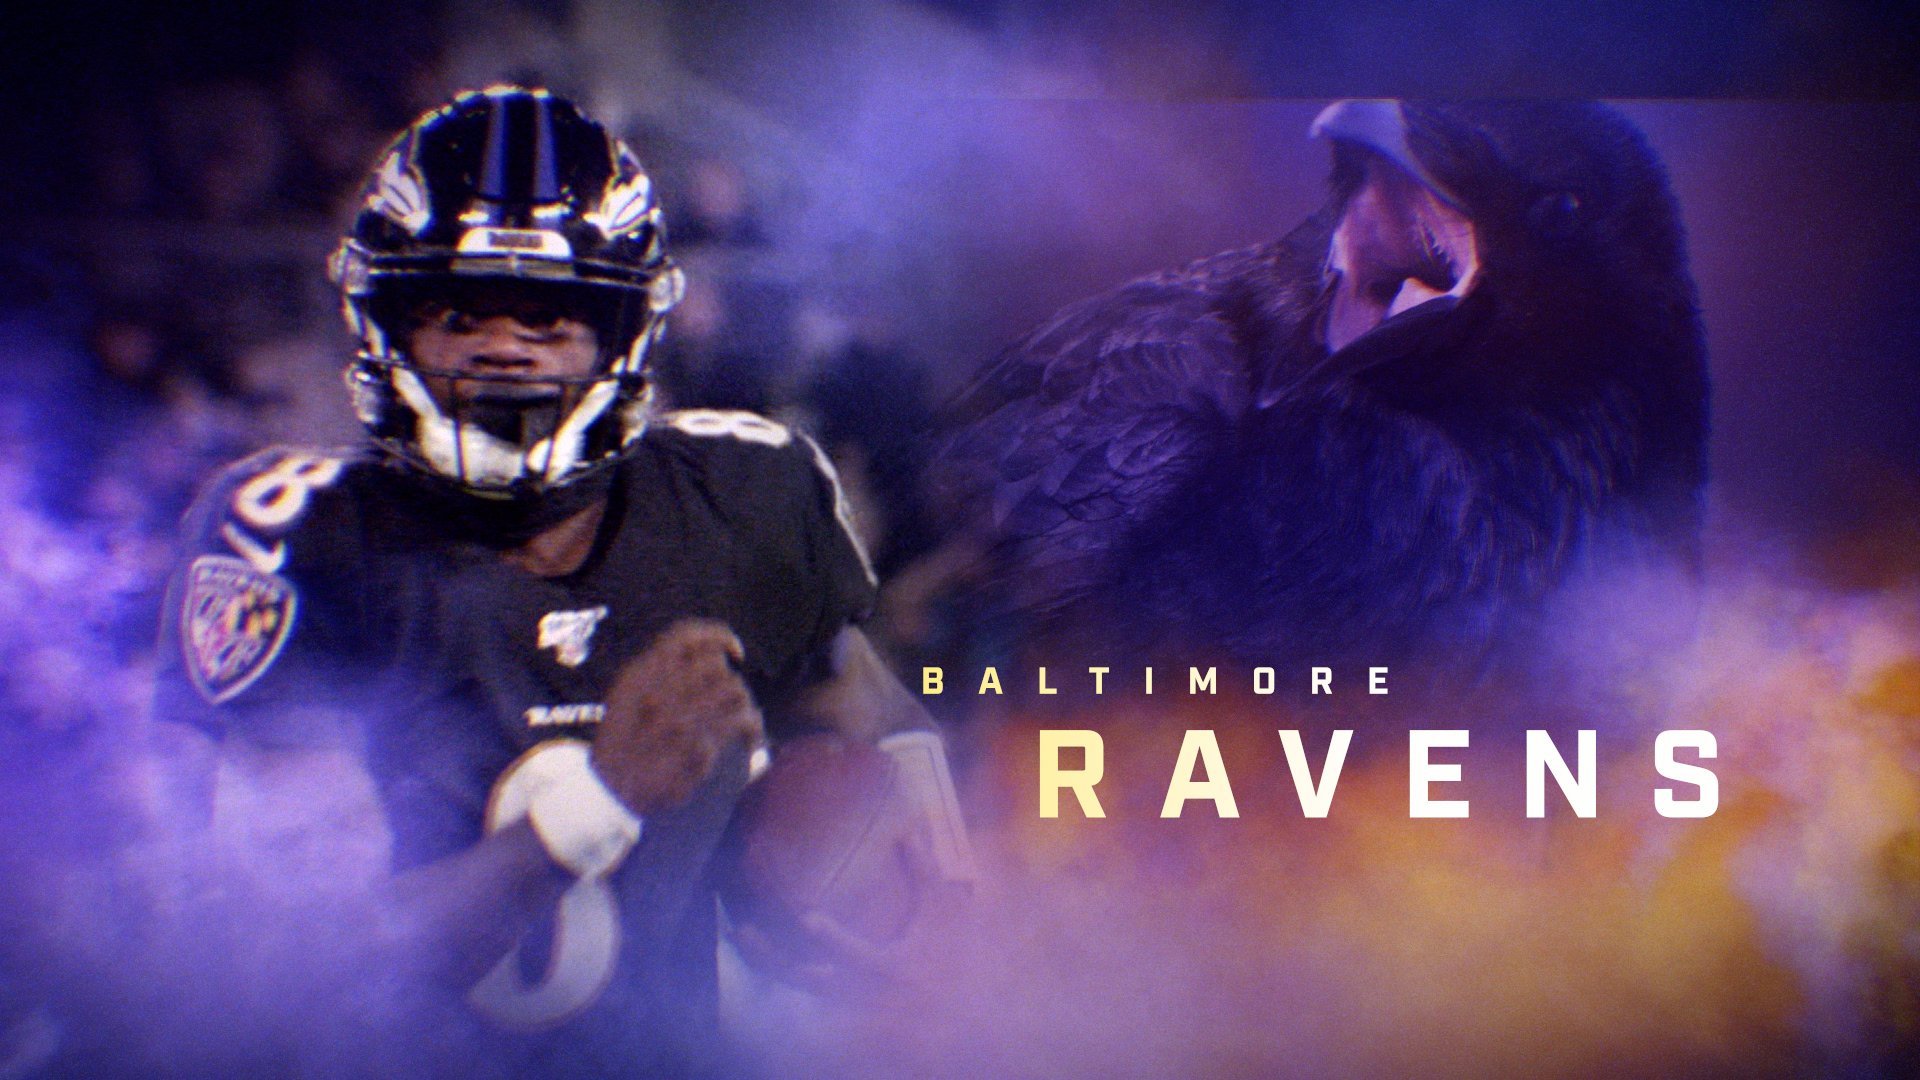 Ravens_H2.jpg